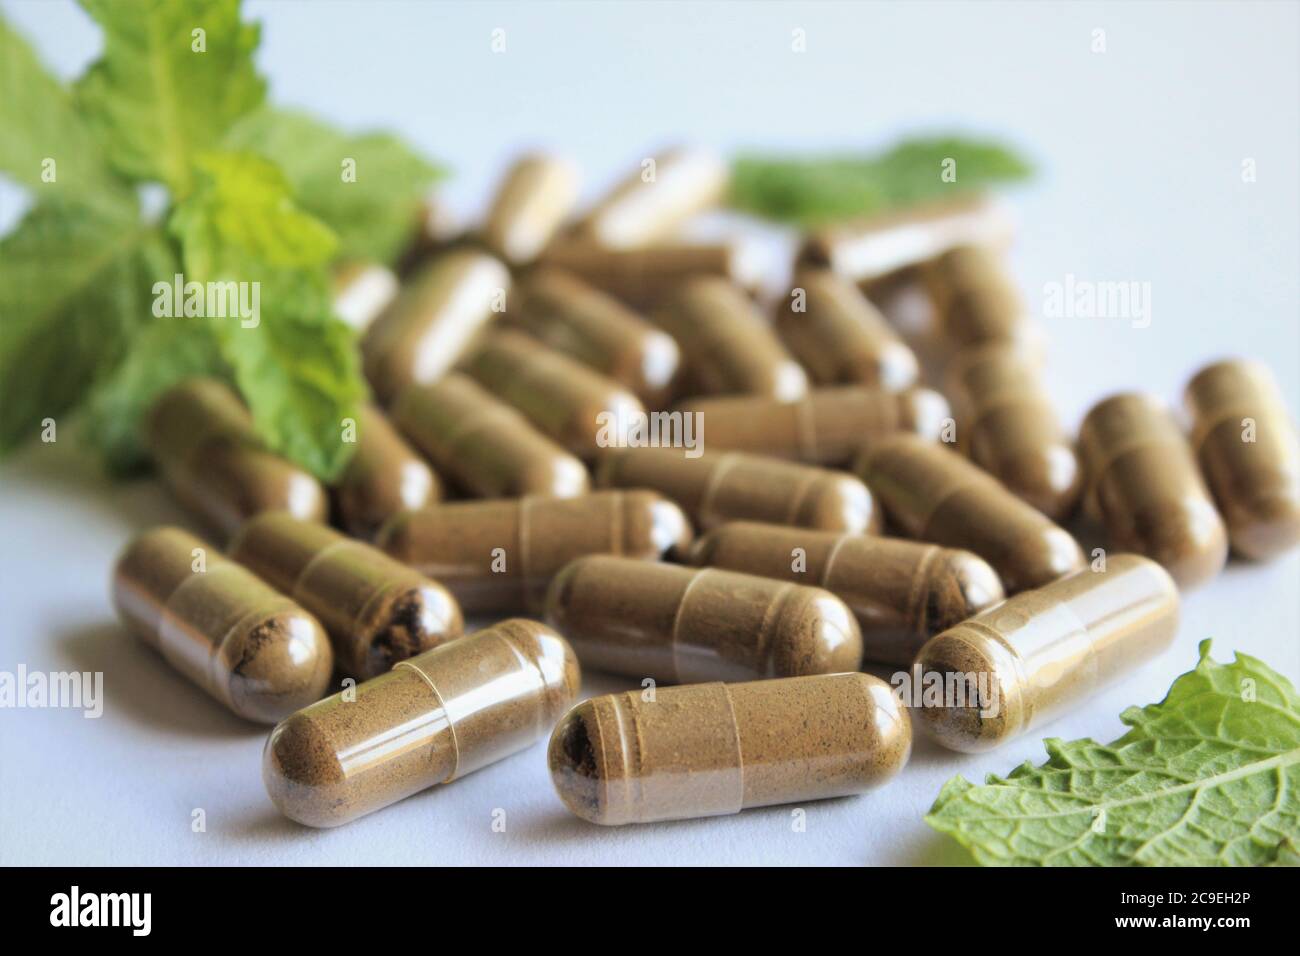 Herbal medicines capsules. stock photo isolate on white Stock Photo